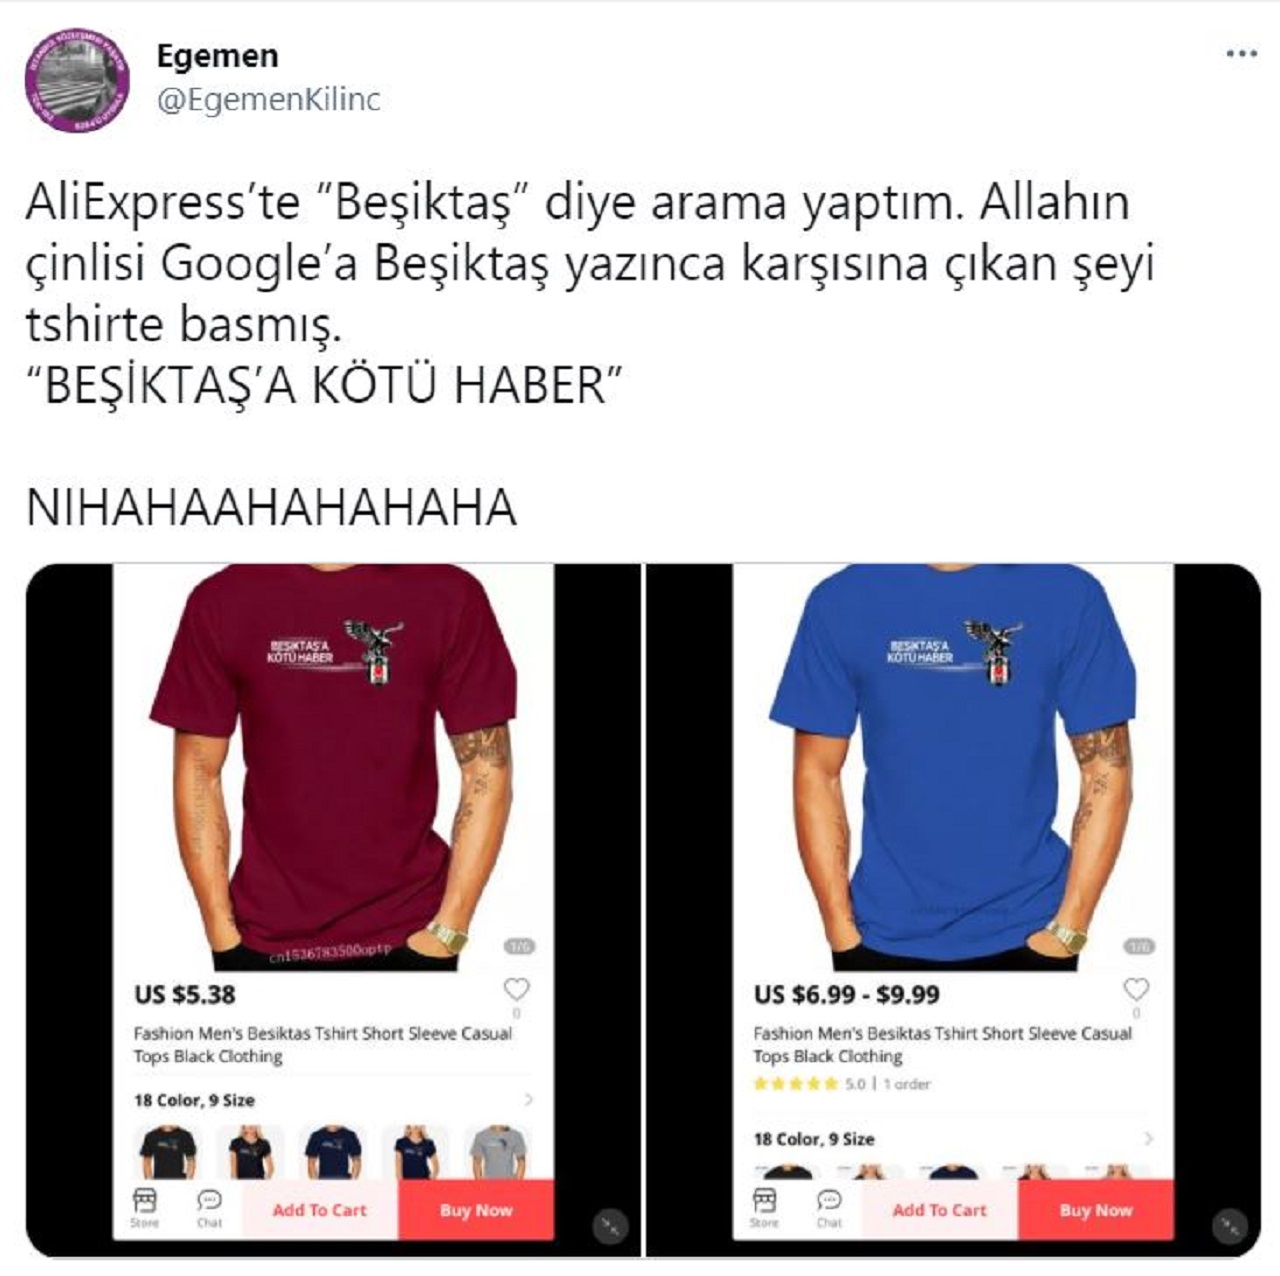 Beşiktaş'a kötü haber tişörtü